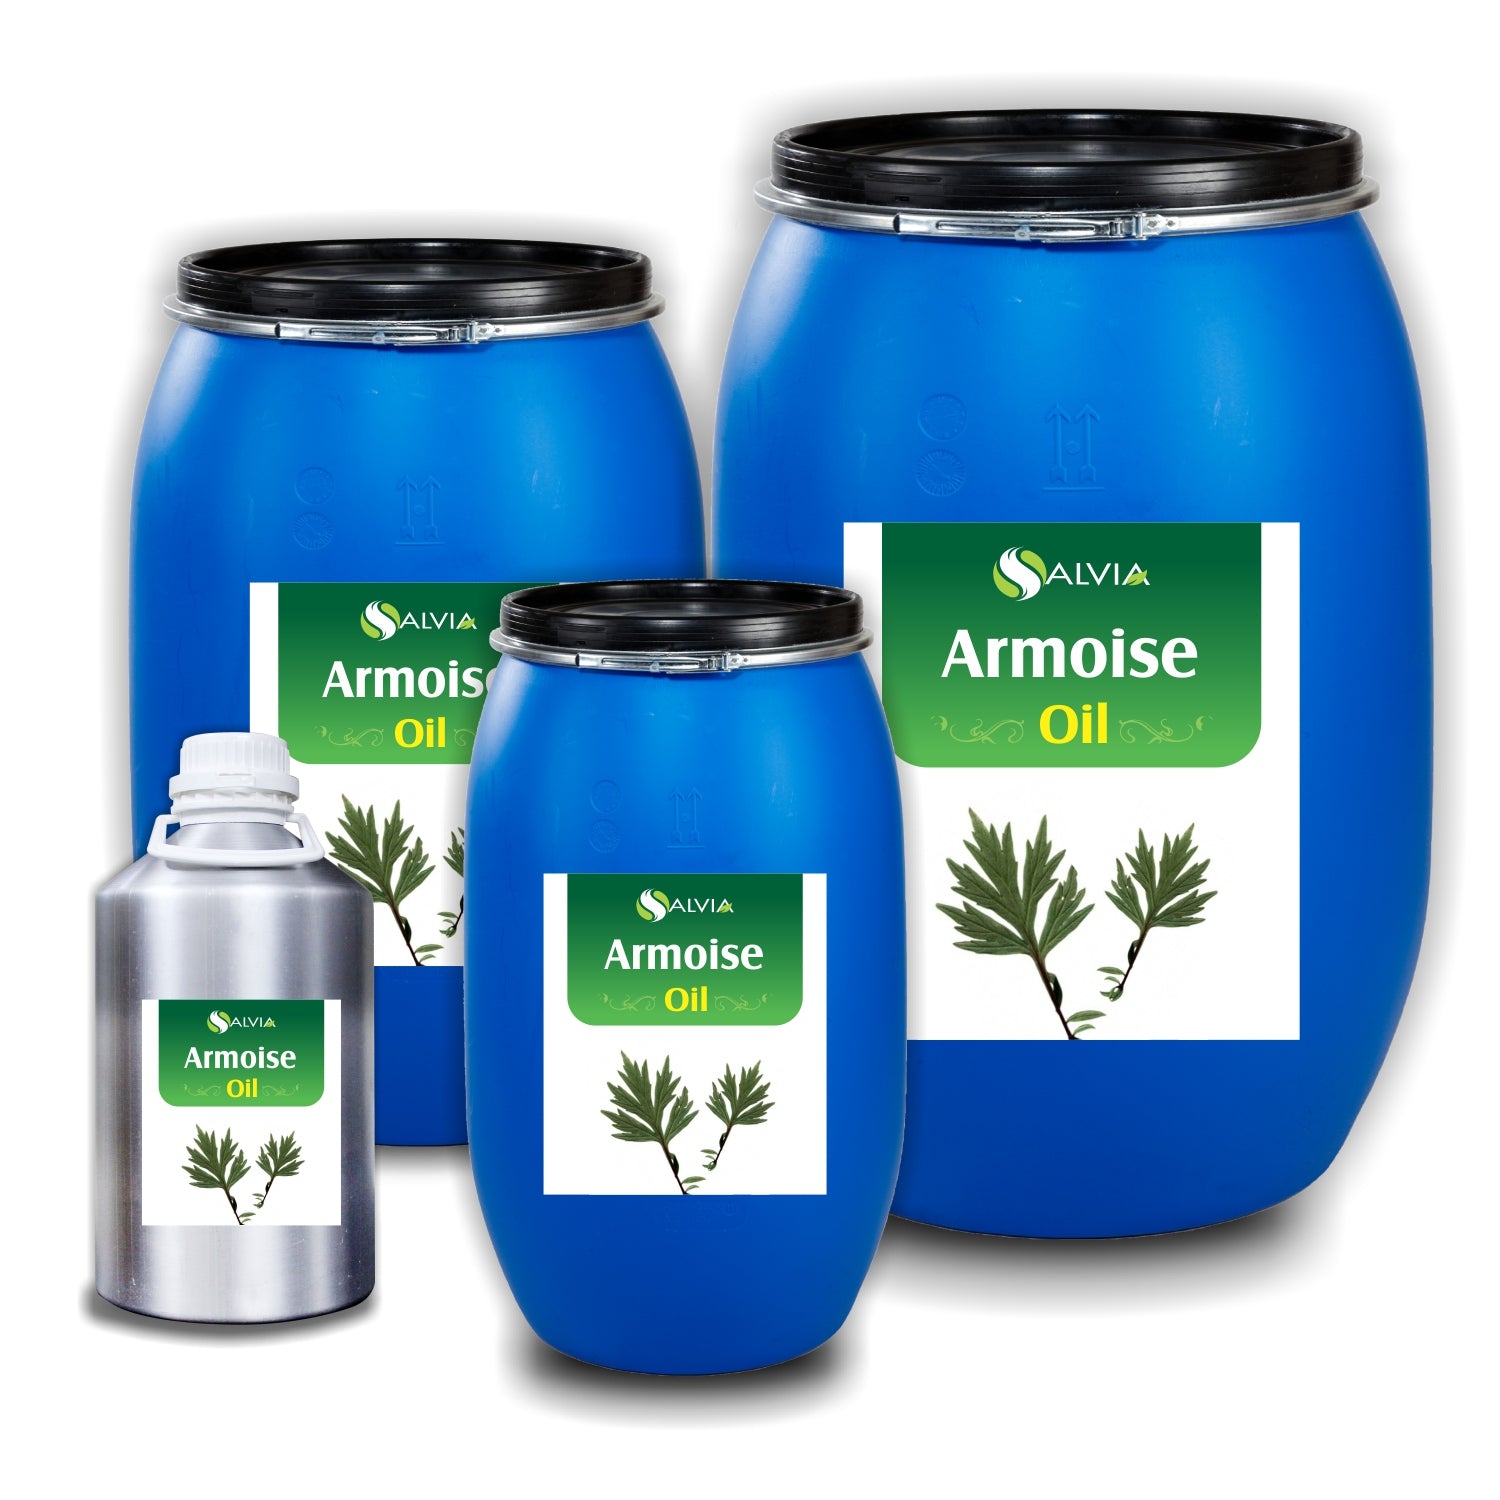 Salvia Natural Essential Oils 10kg Armoise Oil (Pimpinella Anisum) 100% Natural Pure Essential Oil